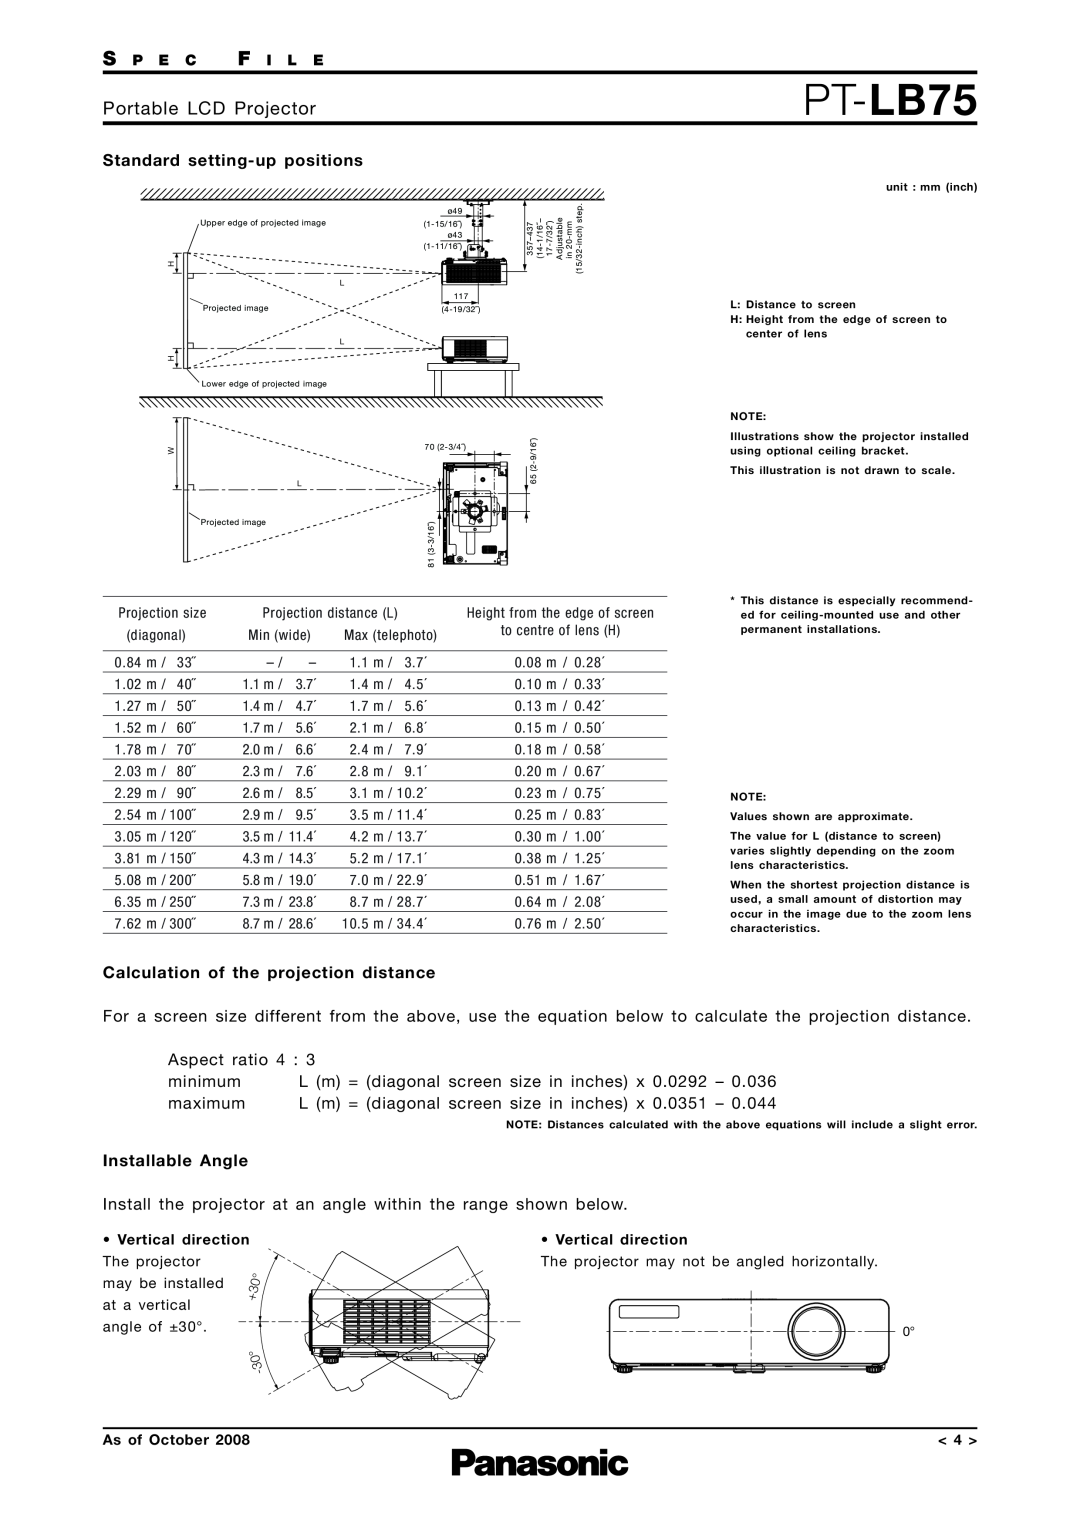 Panasonic PT-LB75 Standard setting-up positions, Calculation of the projection distance, Aspect ratio 4, minimum, 0.036 